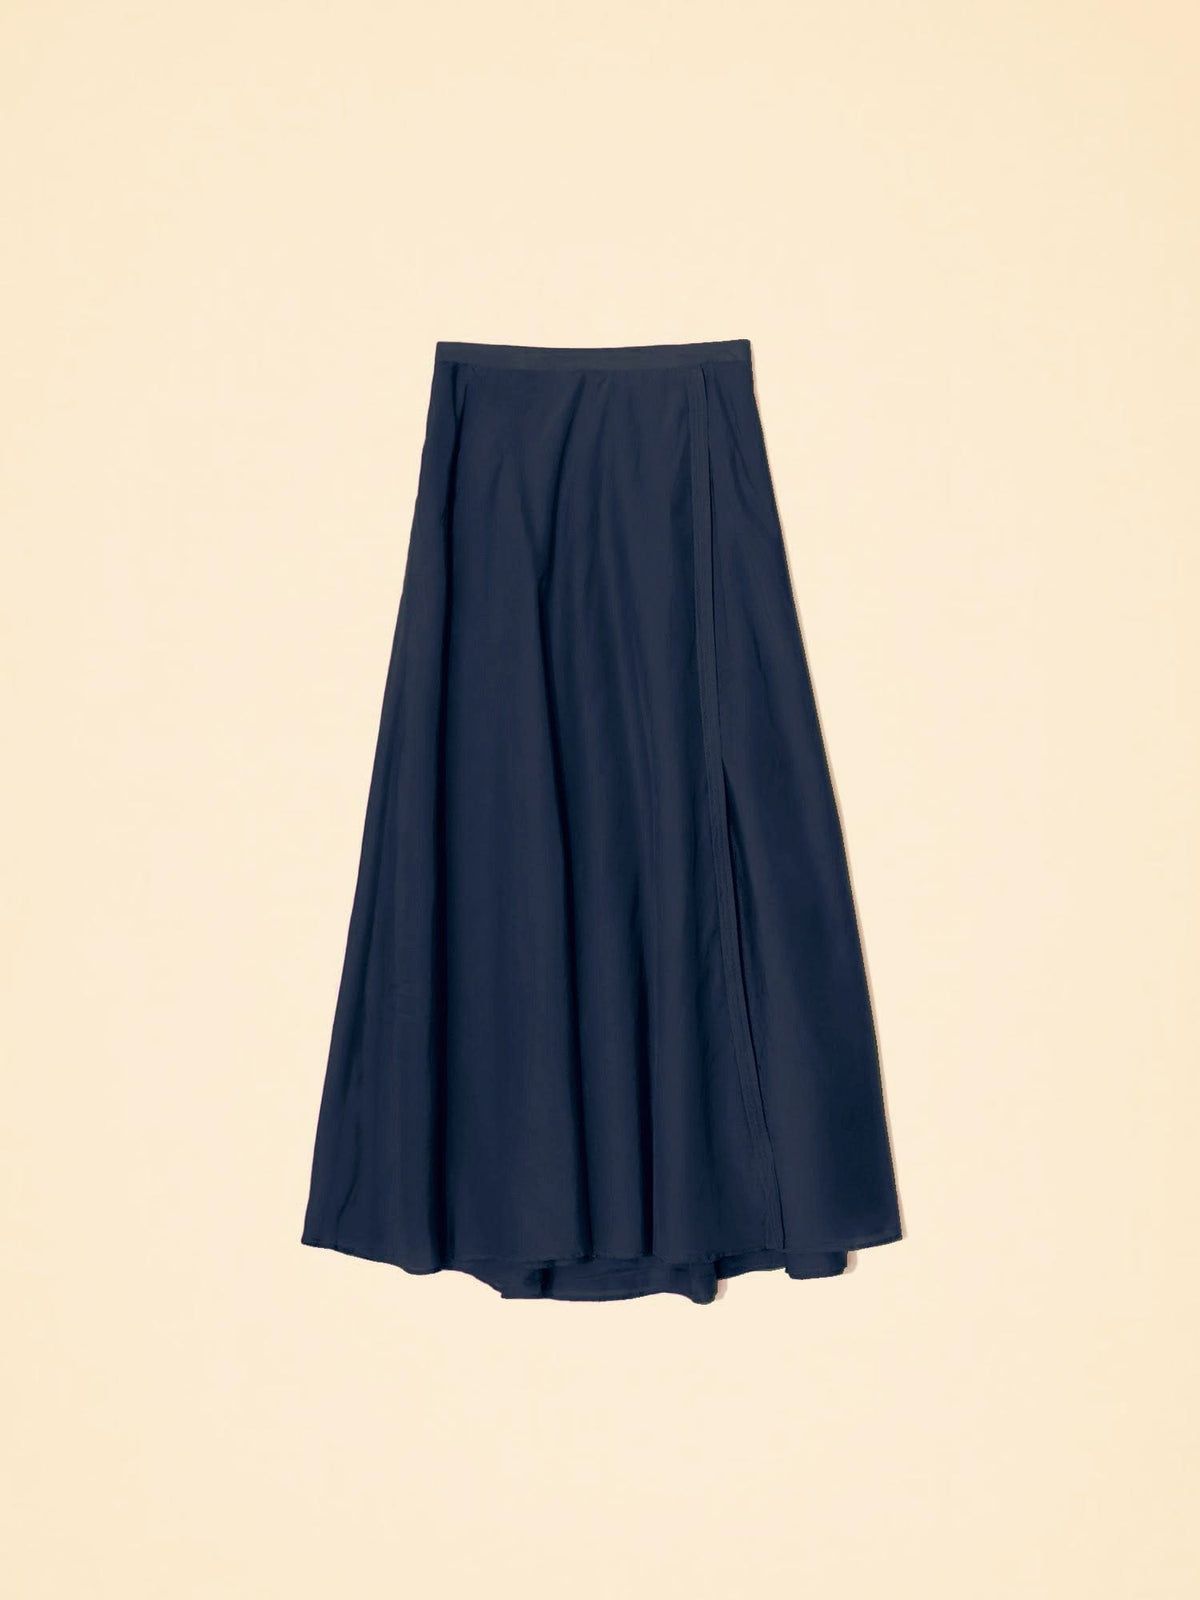 Gable Skirt - Blue Sapphire